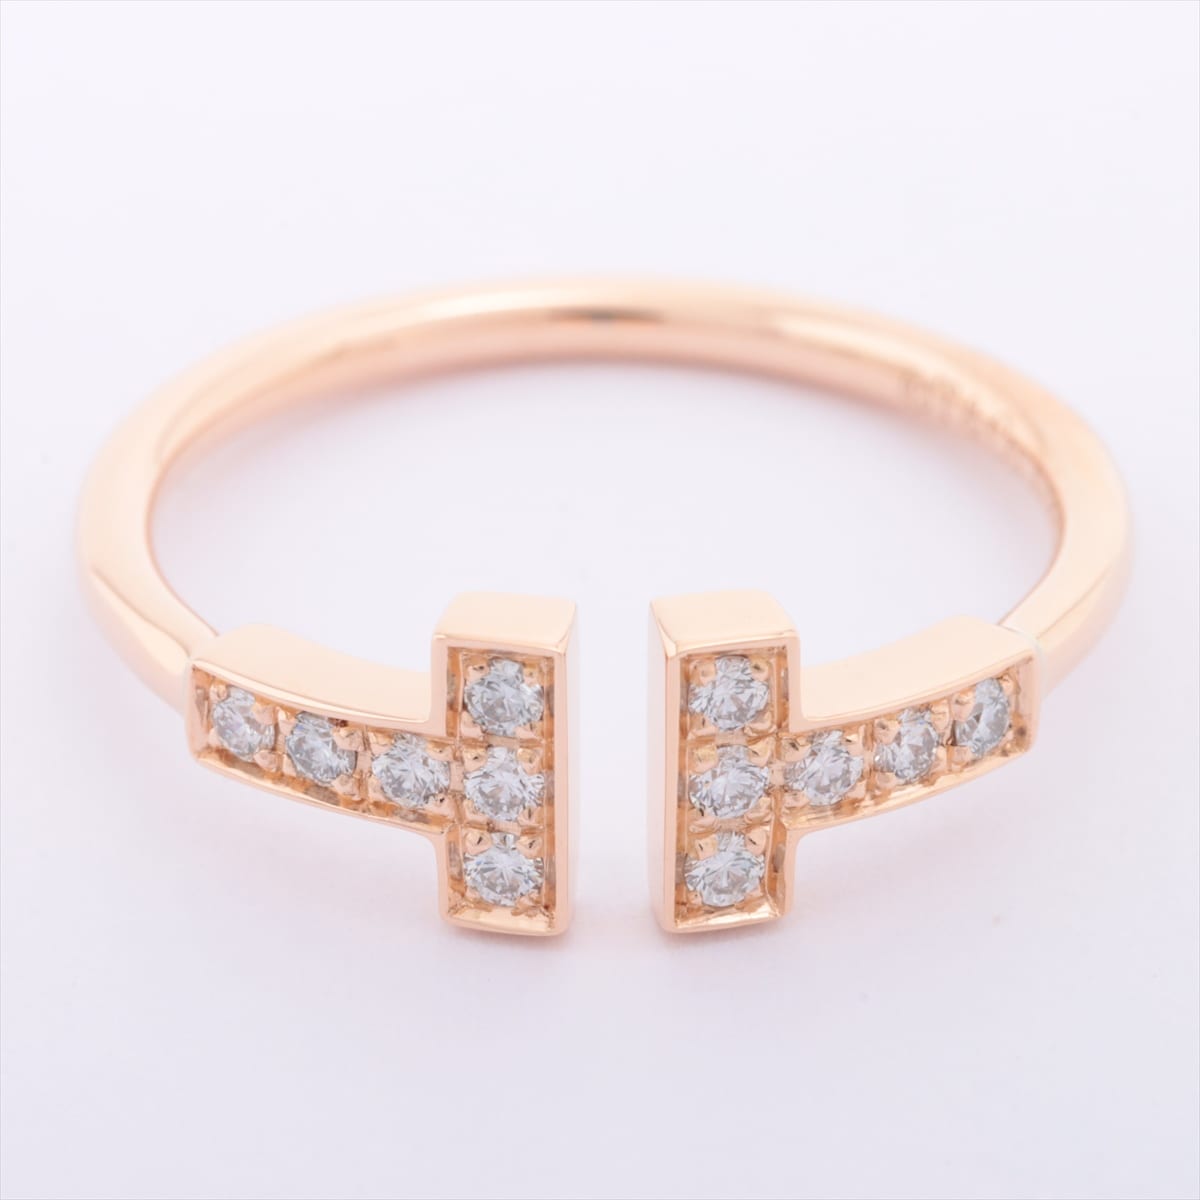 Tiffany T Wire diamond rings 750 PG 2.5g